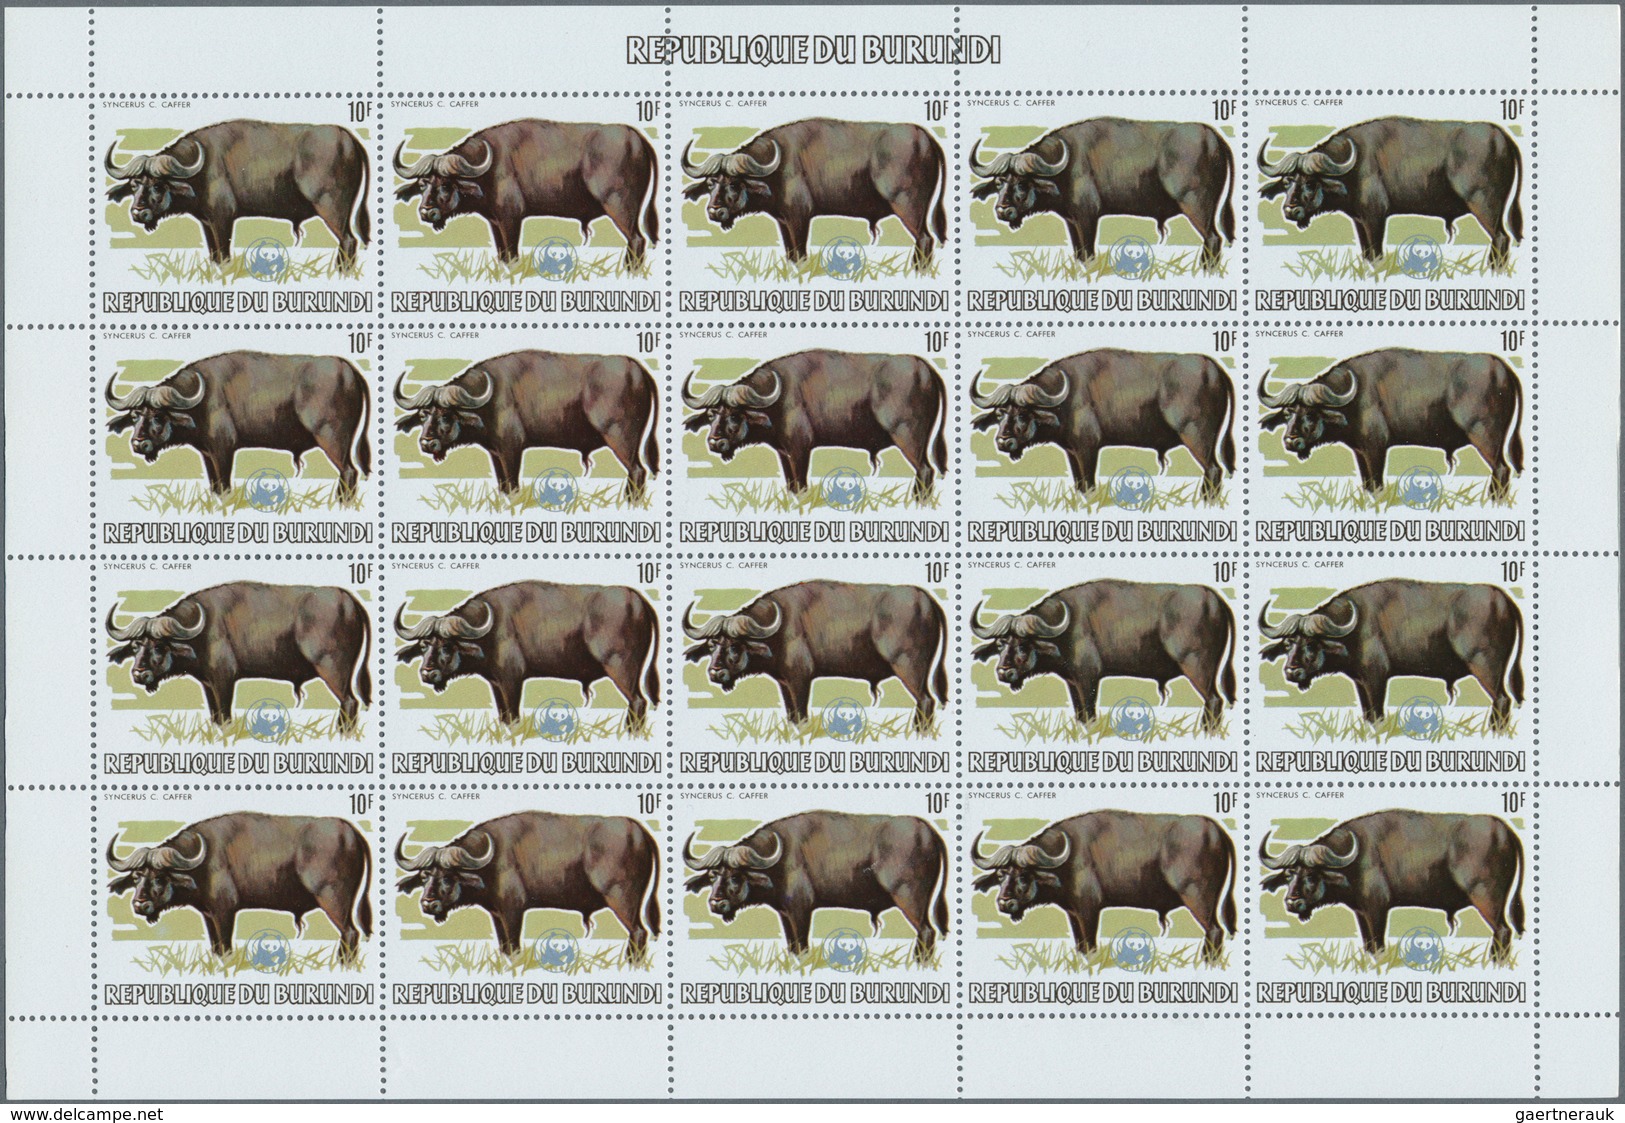 Burundi: 1982, African Wildlife complete set of 13 from 2fr. to 85fr. (Lion, Giraffe, Rhinoceros, El